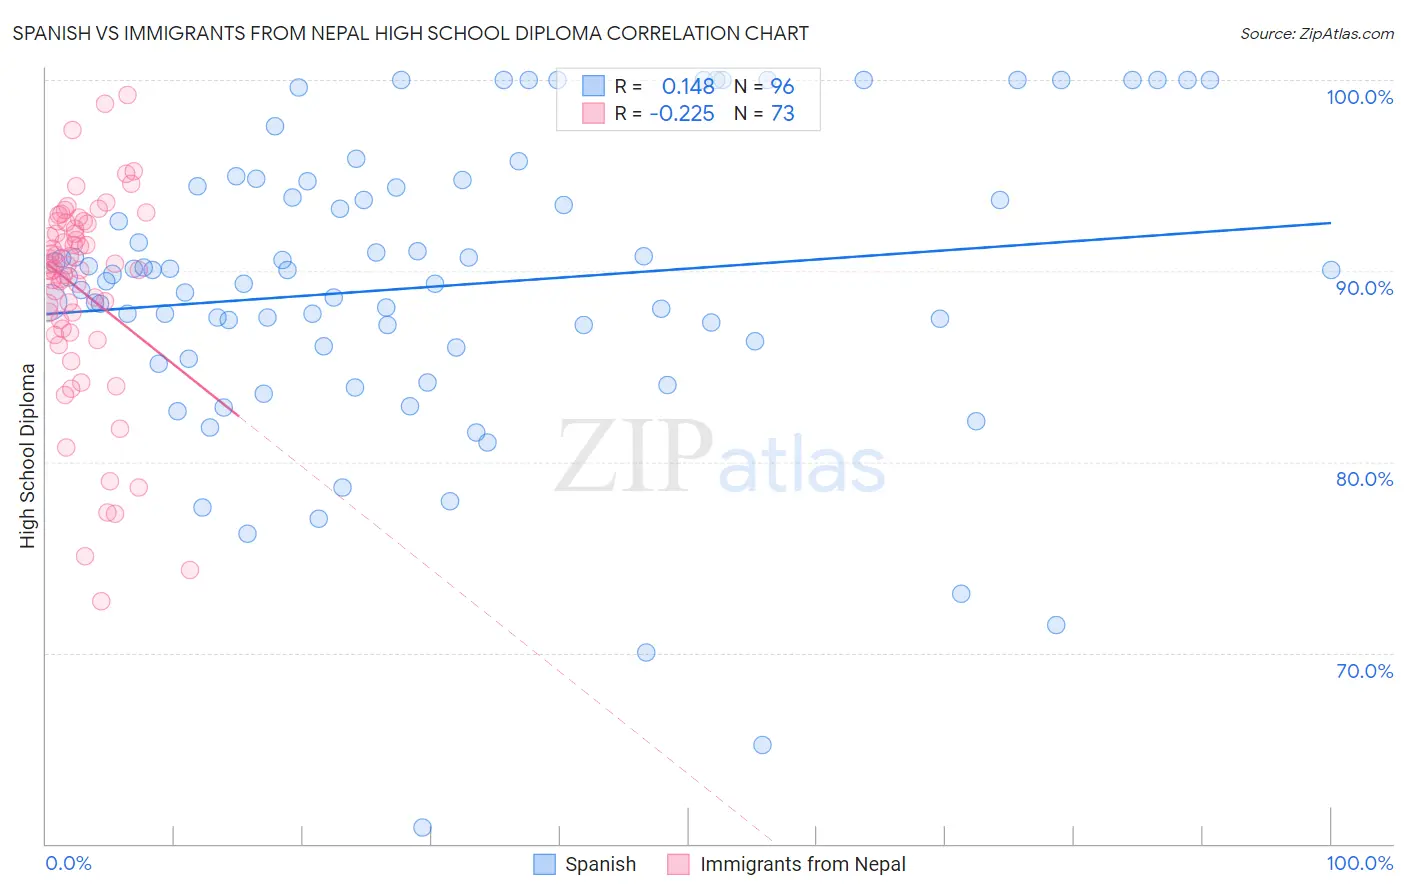 Spanish vs Immigrants from Nepal High School Diploma